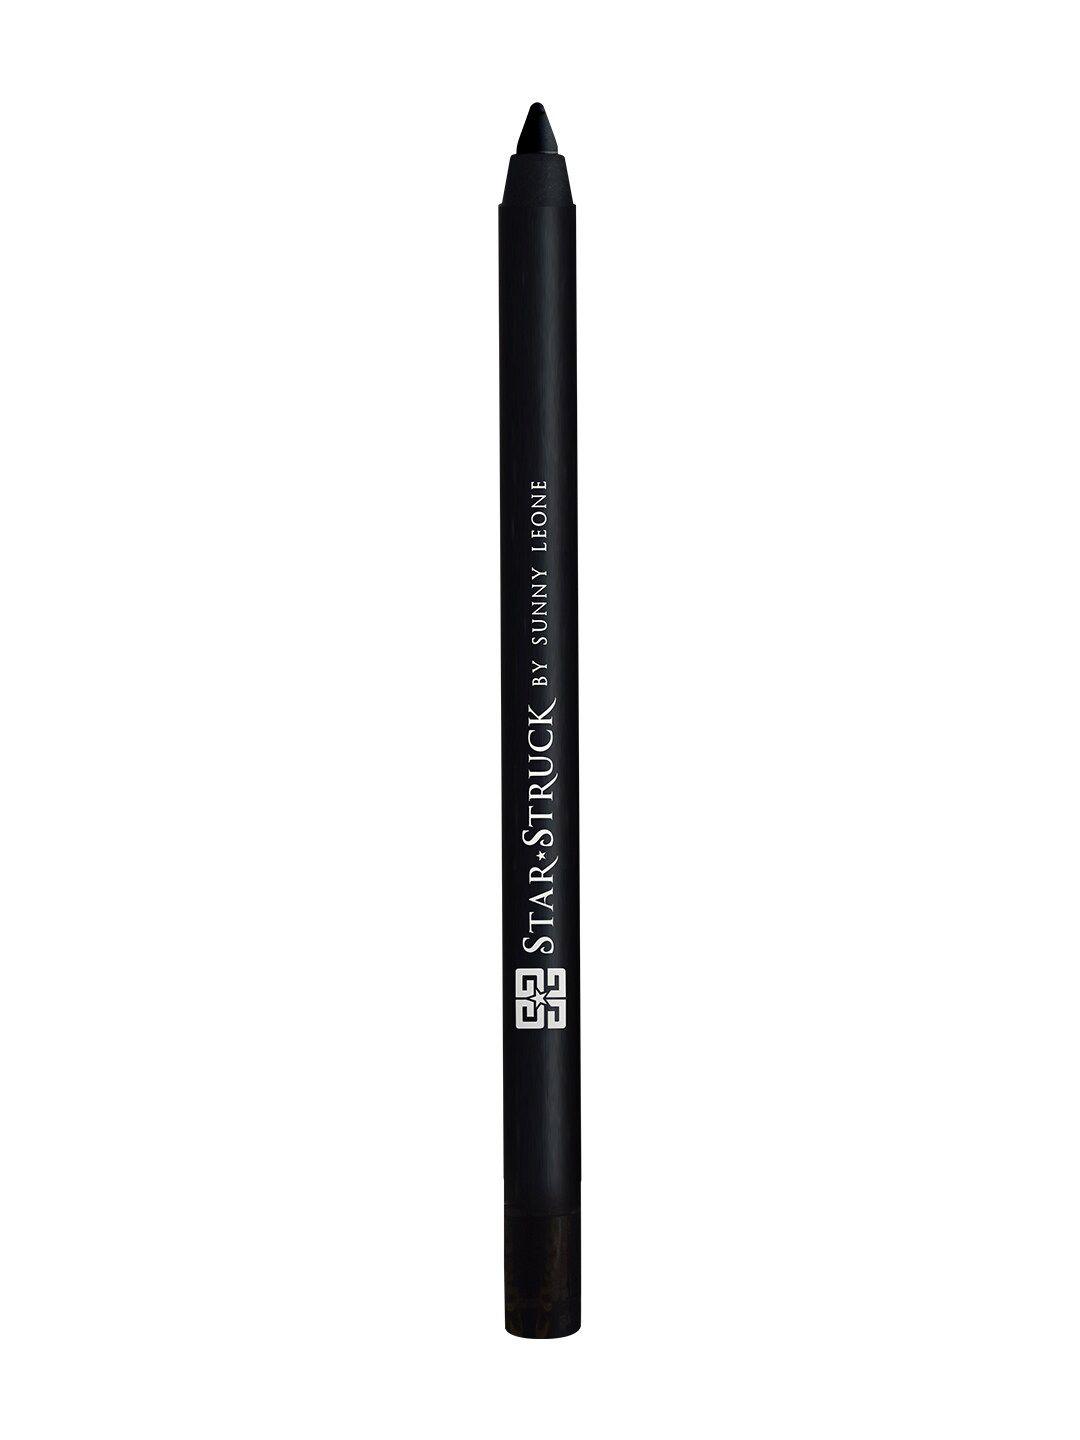 star struck by sunny leone kohl long lasting & waterproof pencil eye liner - black